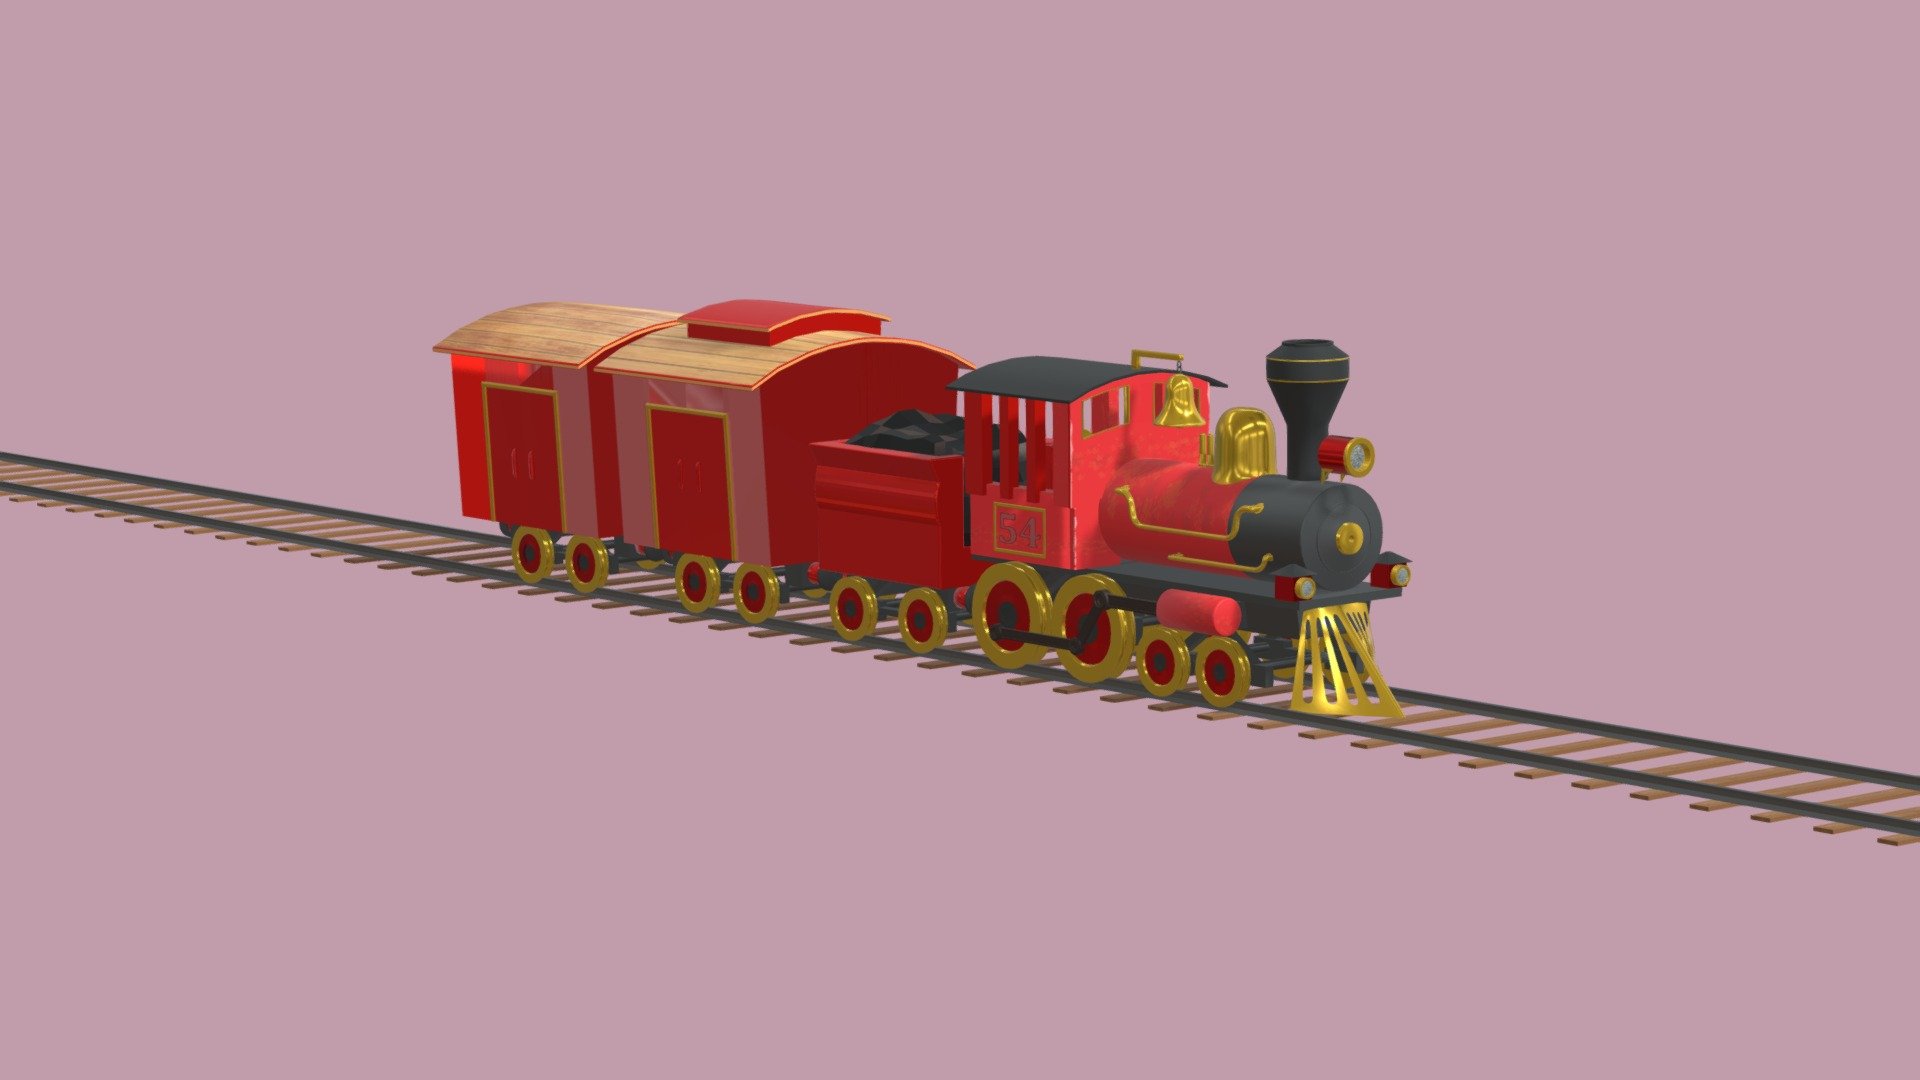 Train (Steam Train with rig)